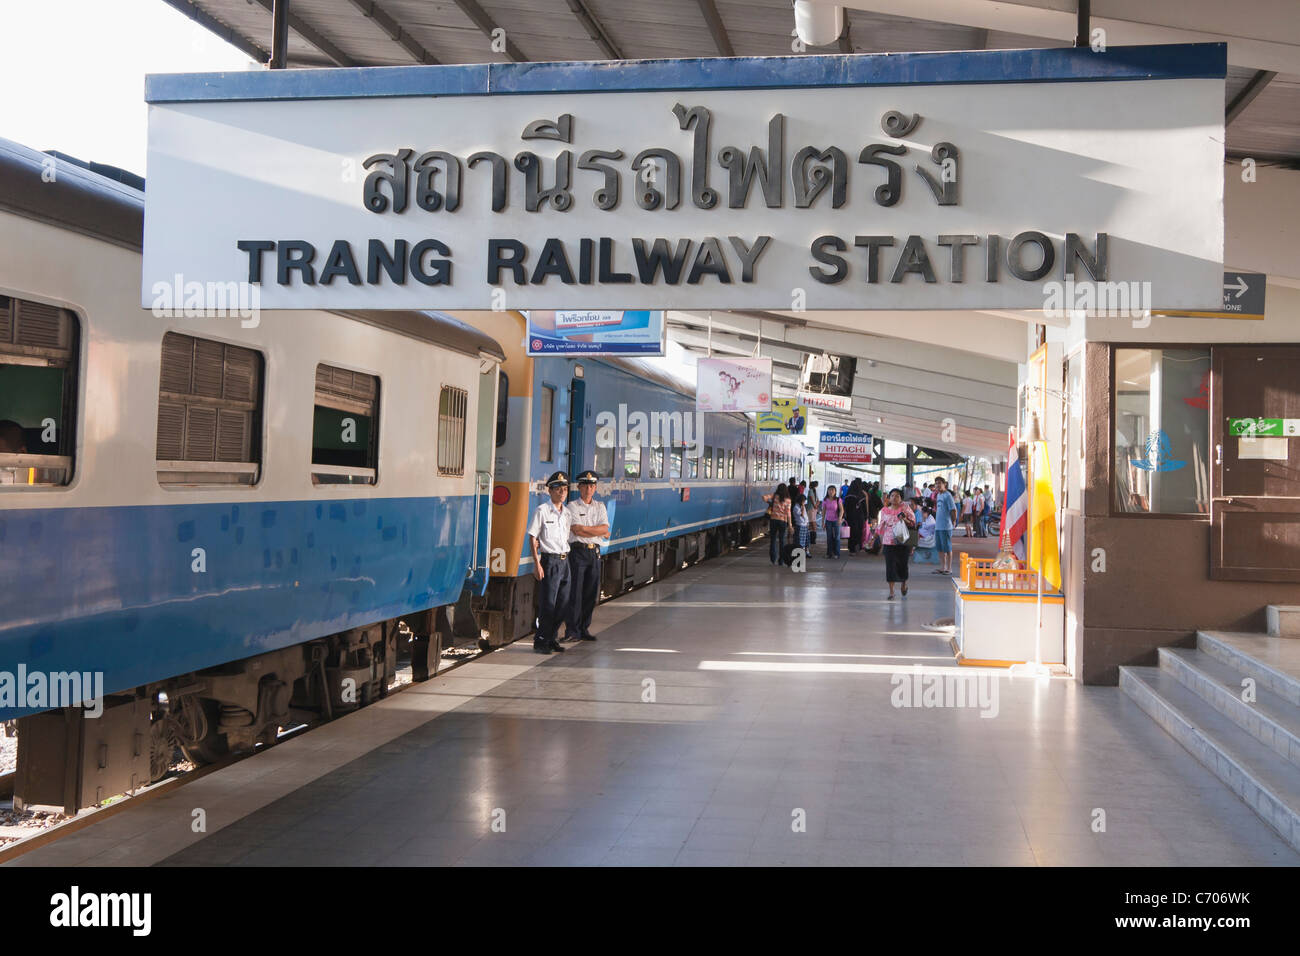 Trang railway station, Thailand Stock Photo